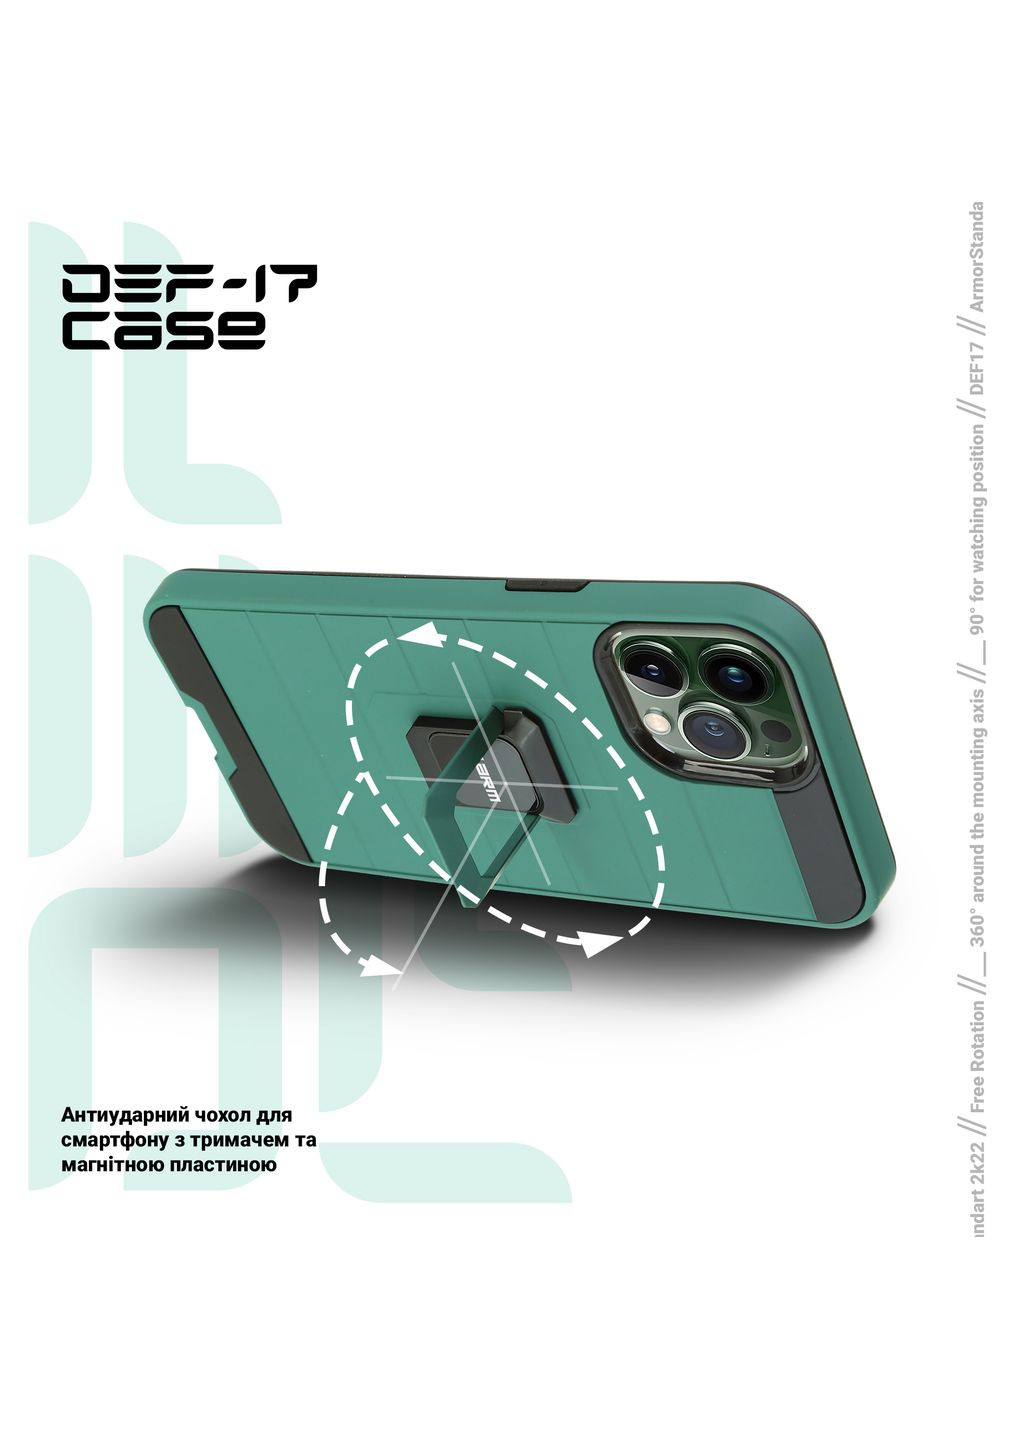 Чехол DEF17 case для Apple iPhone 12 Pro Max Military Green (ARM61337) ArmorStandart (260010081)